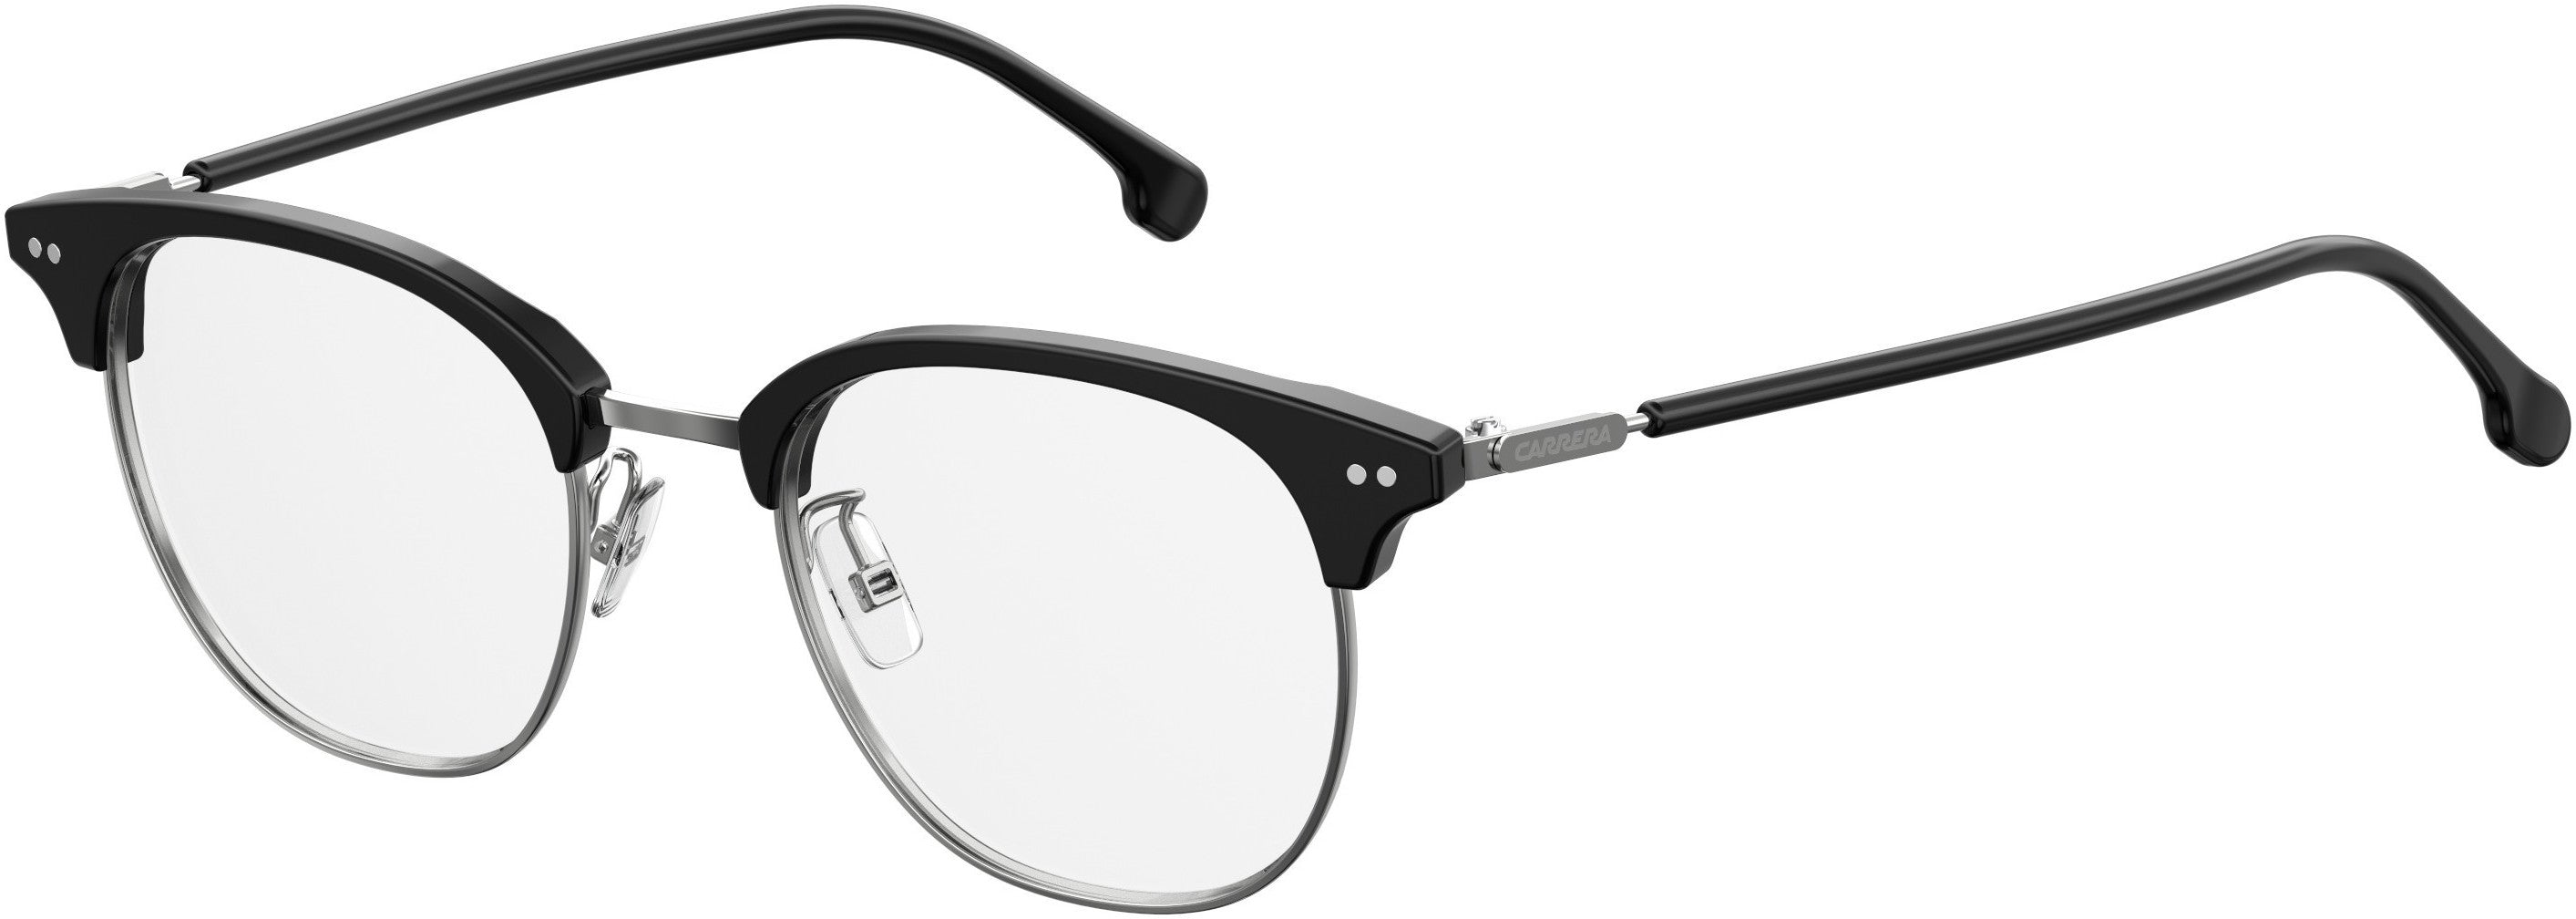  Carrera 161/V/f Rectangular Eyeglasses 0807-0807  Black (00 Demo Lens)